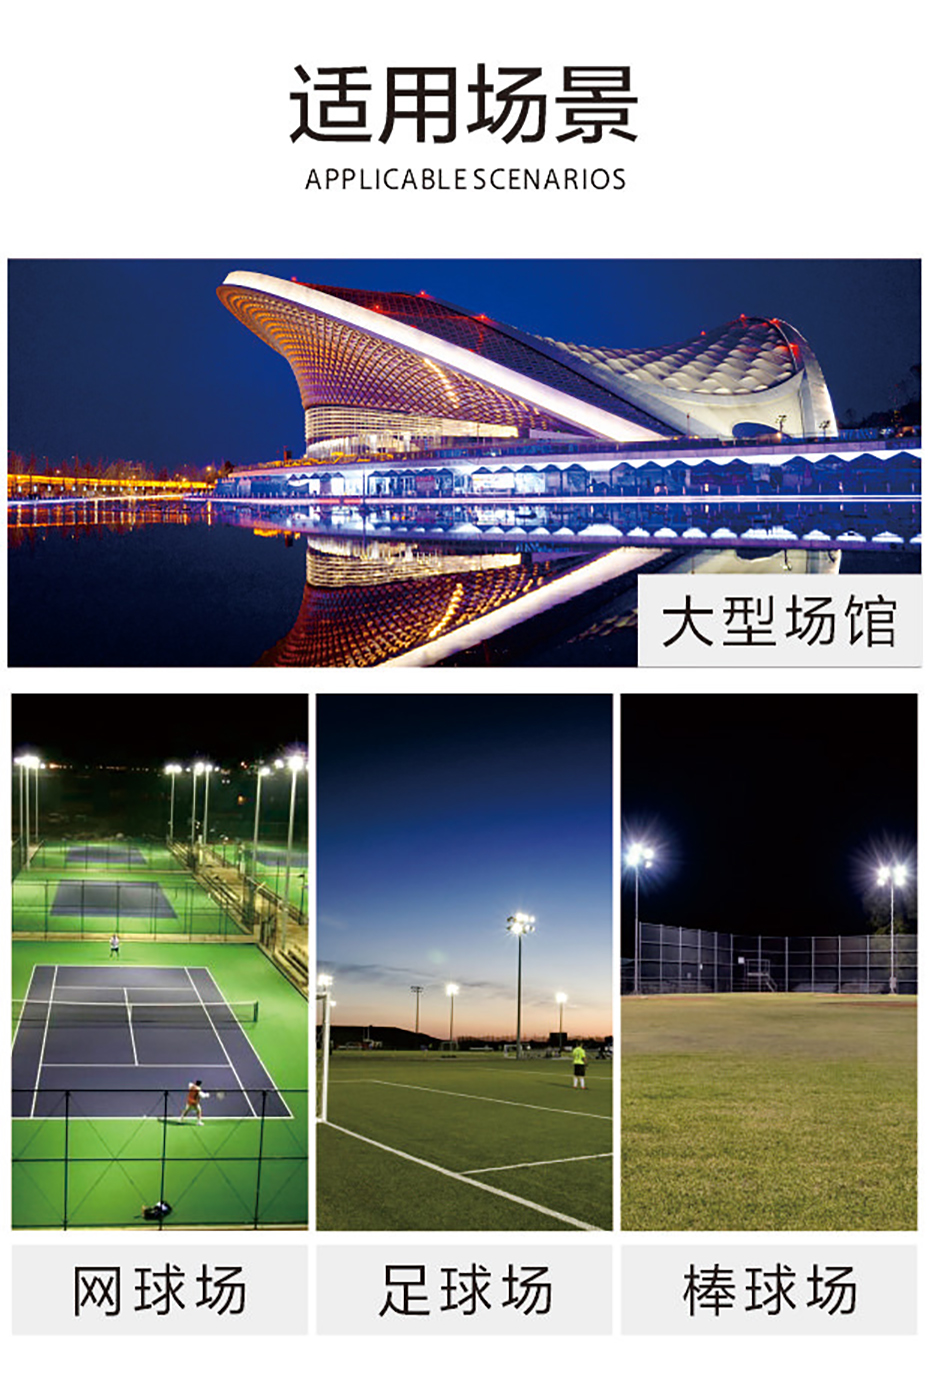 led stadium light applications.jpg